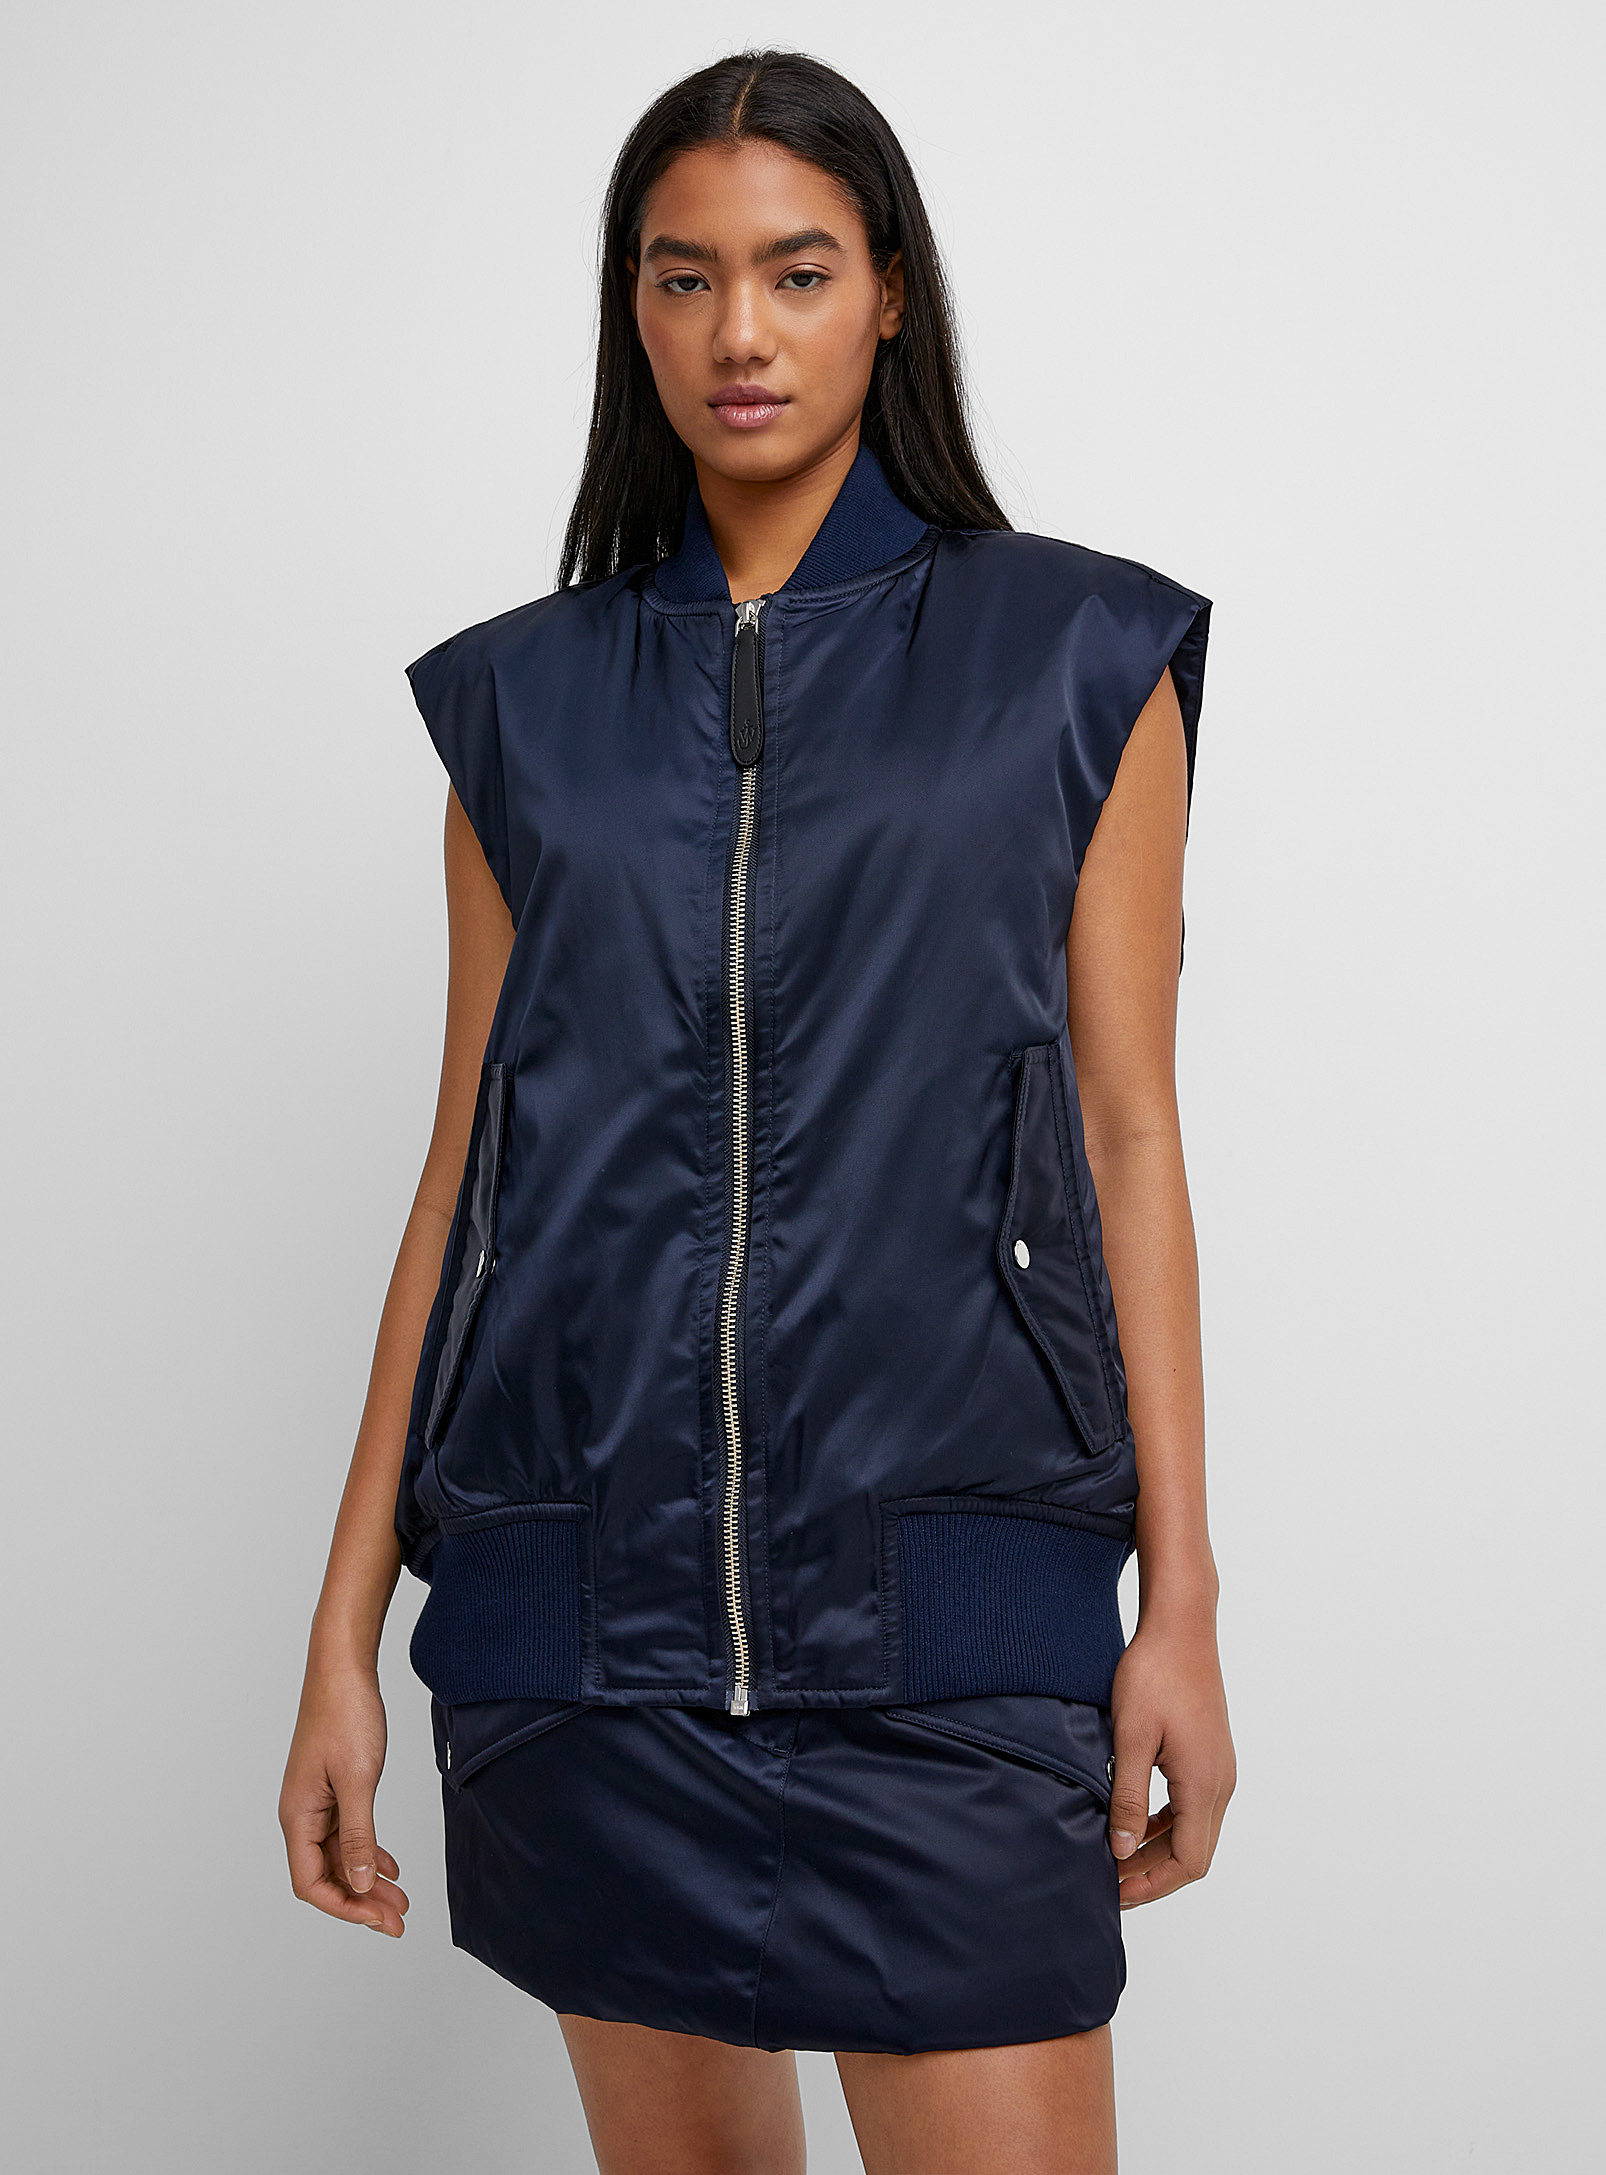 JW Anderson - Women's Sleeveless bomber jacket